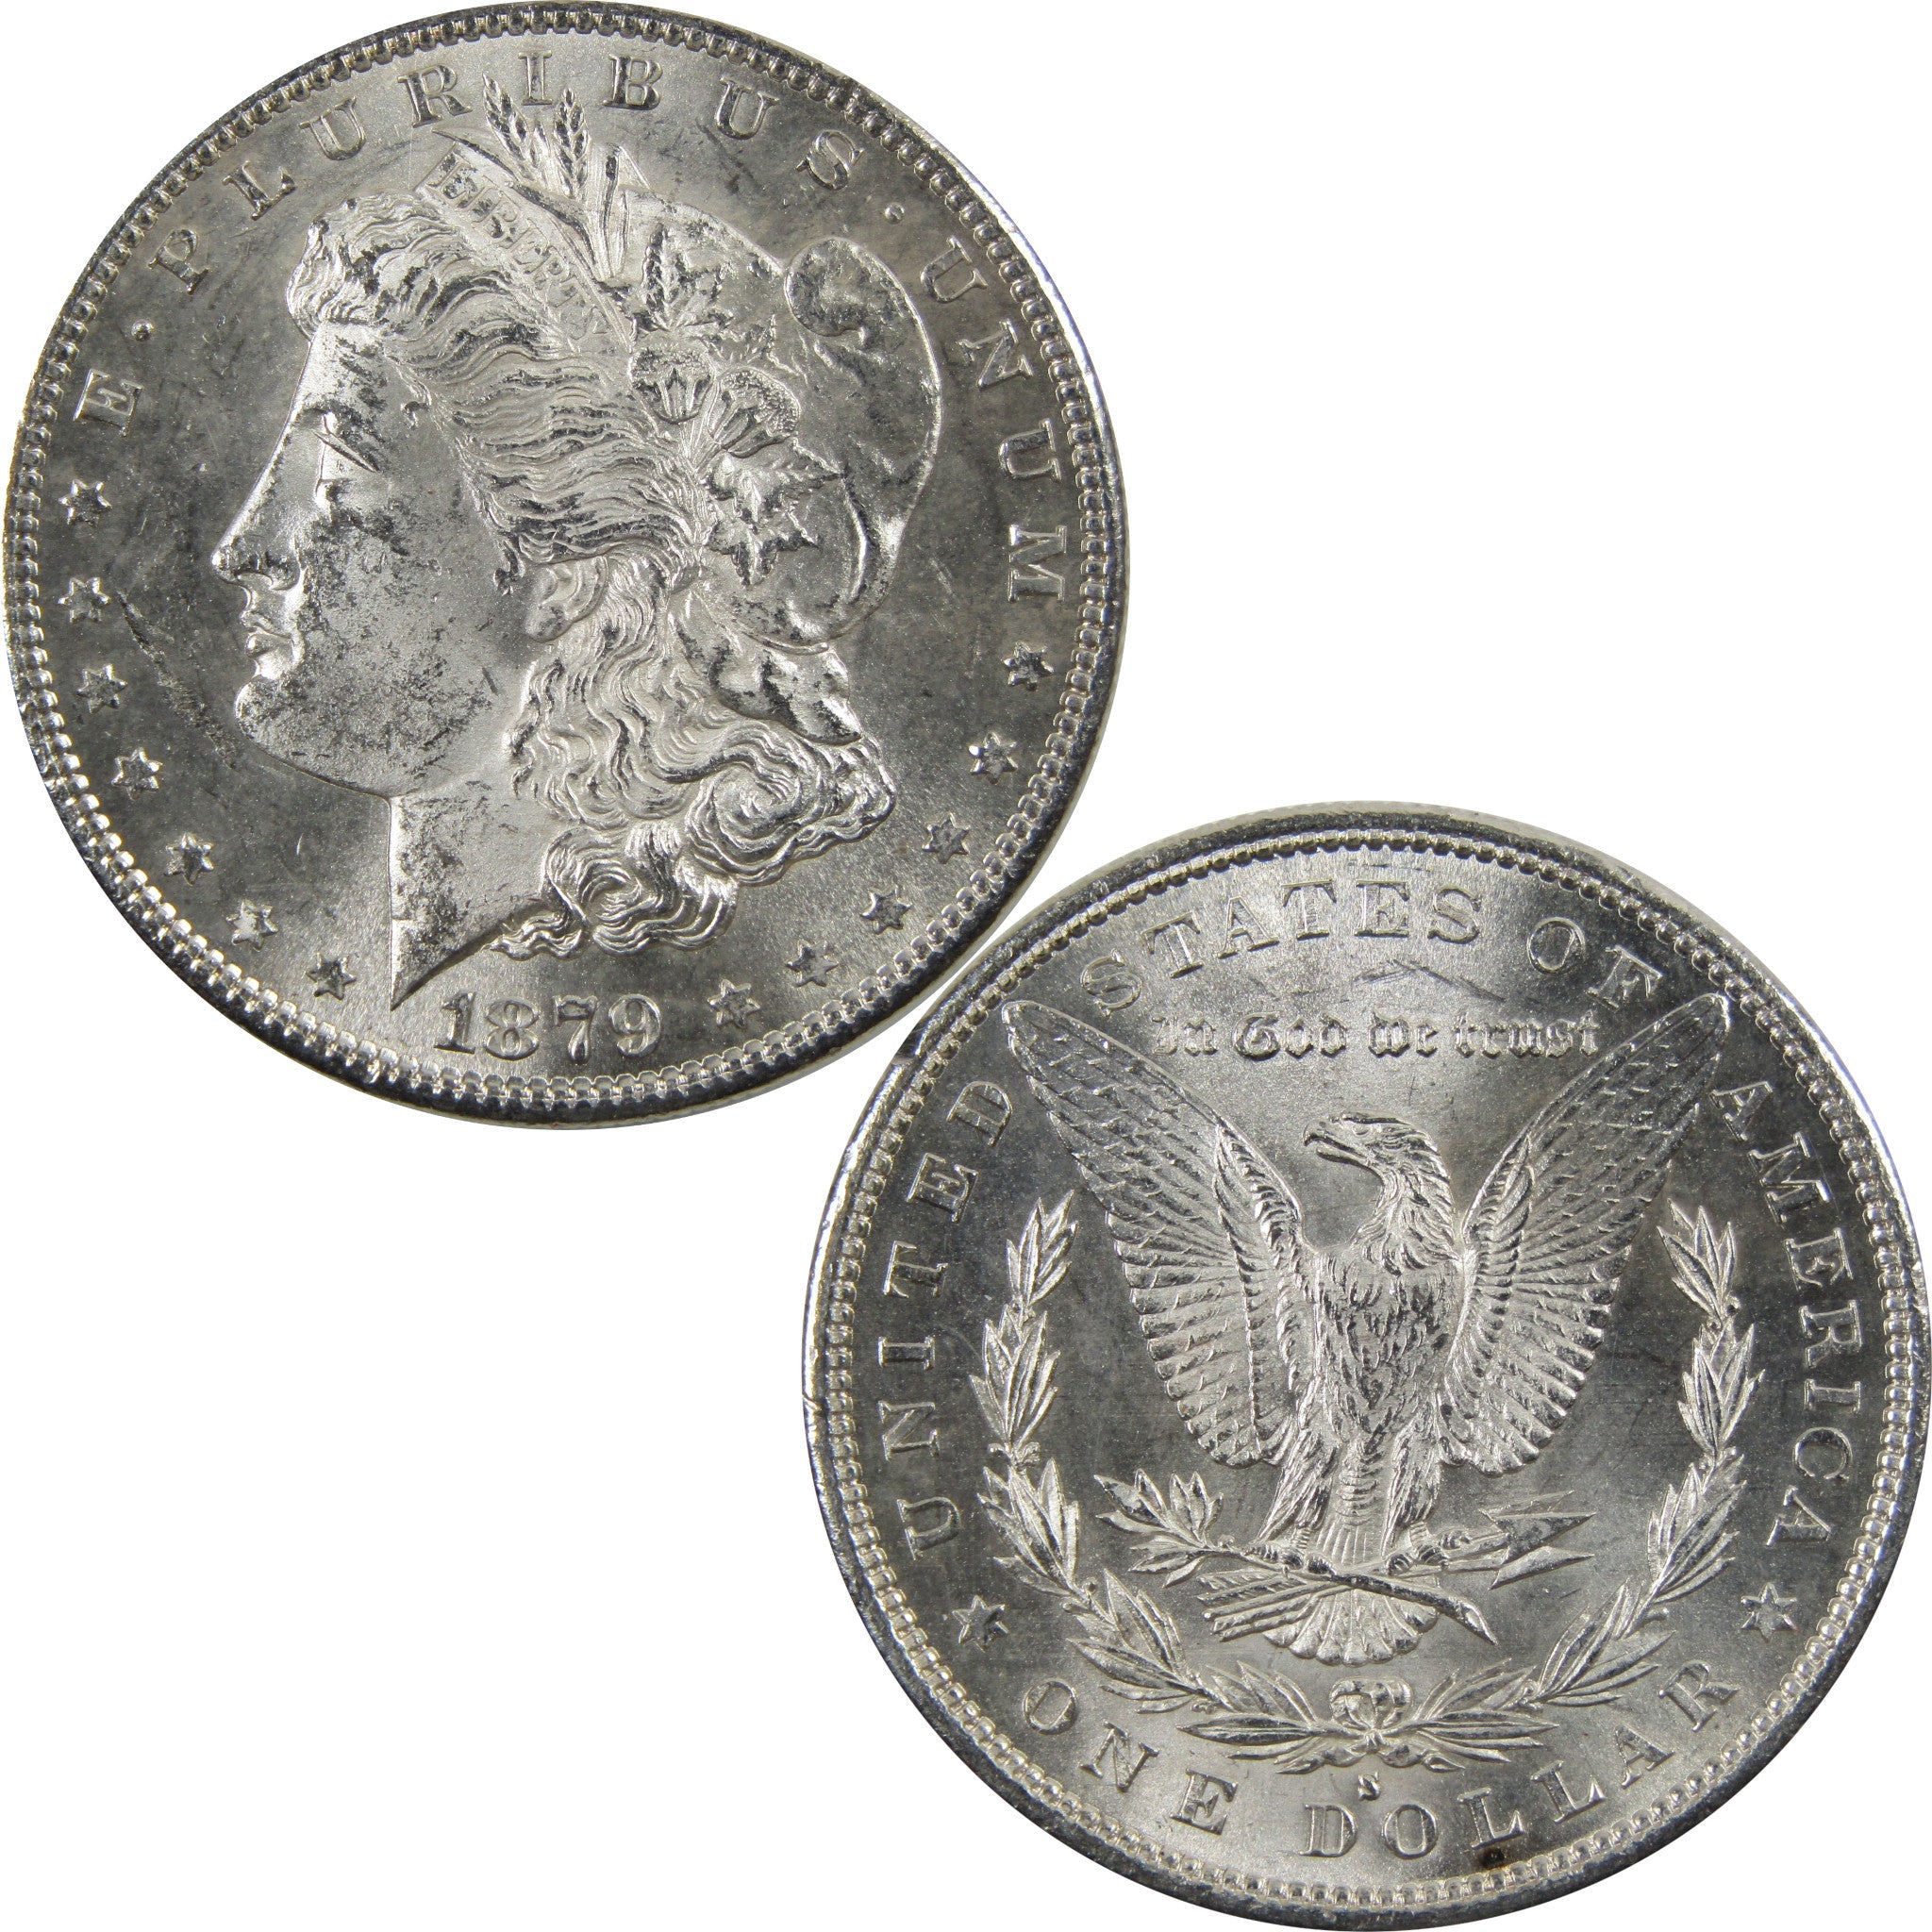 1879 S Morgan Dollar BU Uncirculated 90% Silver $1 SKU:I5447 - Morgan coin - Morgan silver dollar - Morgan silver dollar for sale - Profile Coins &amp; Collectibles